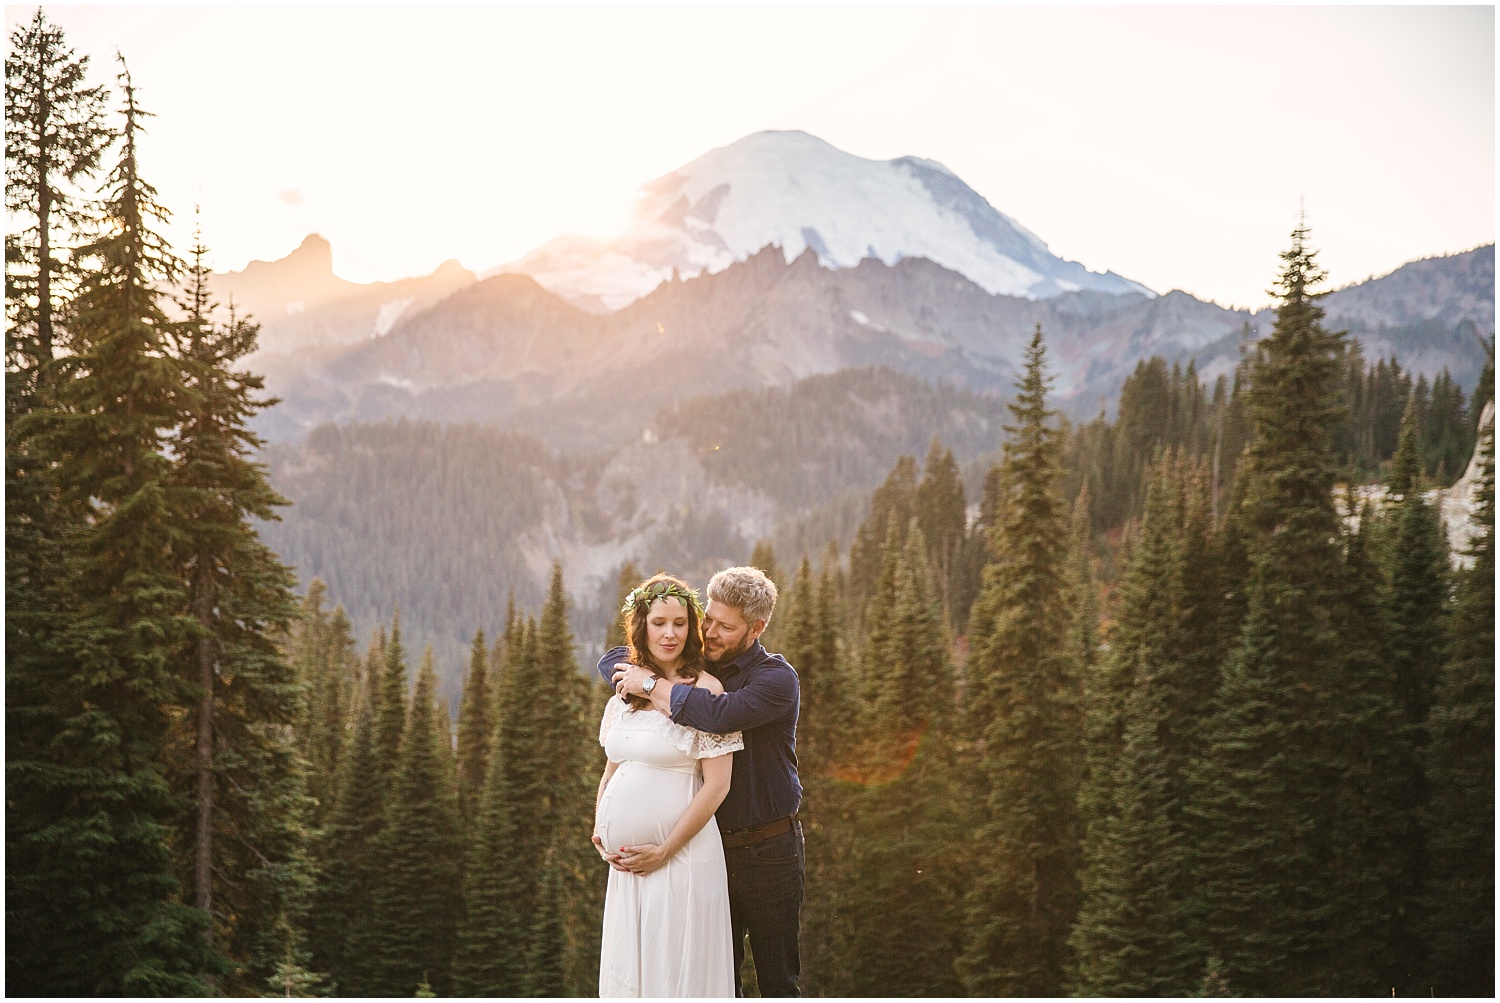 Mount Rainier National Park maternity photos at sunset